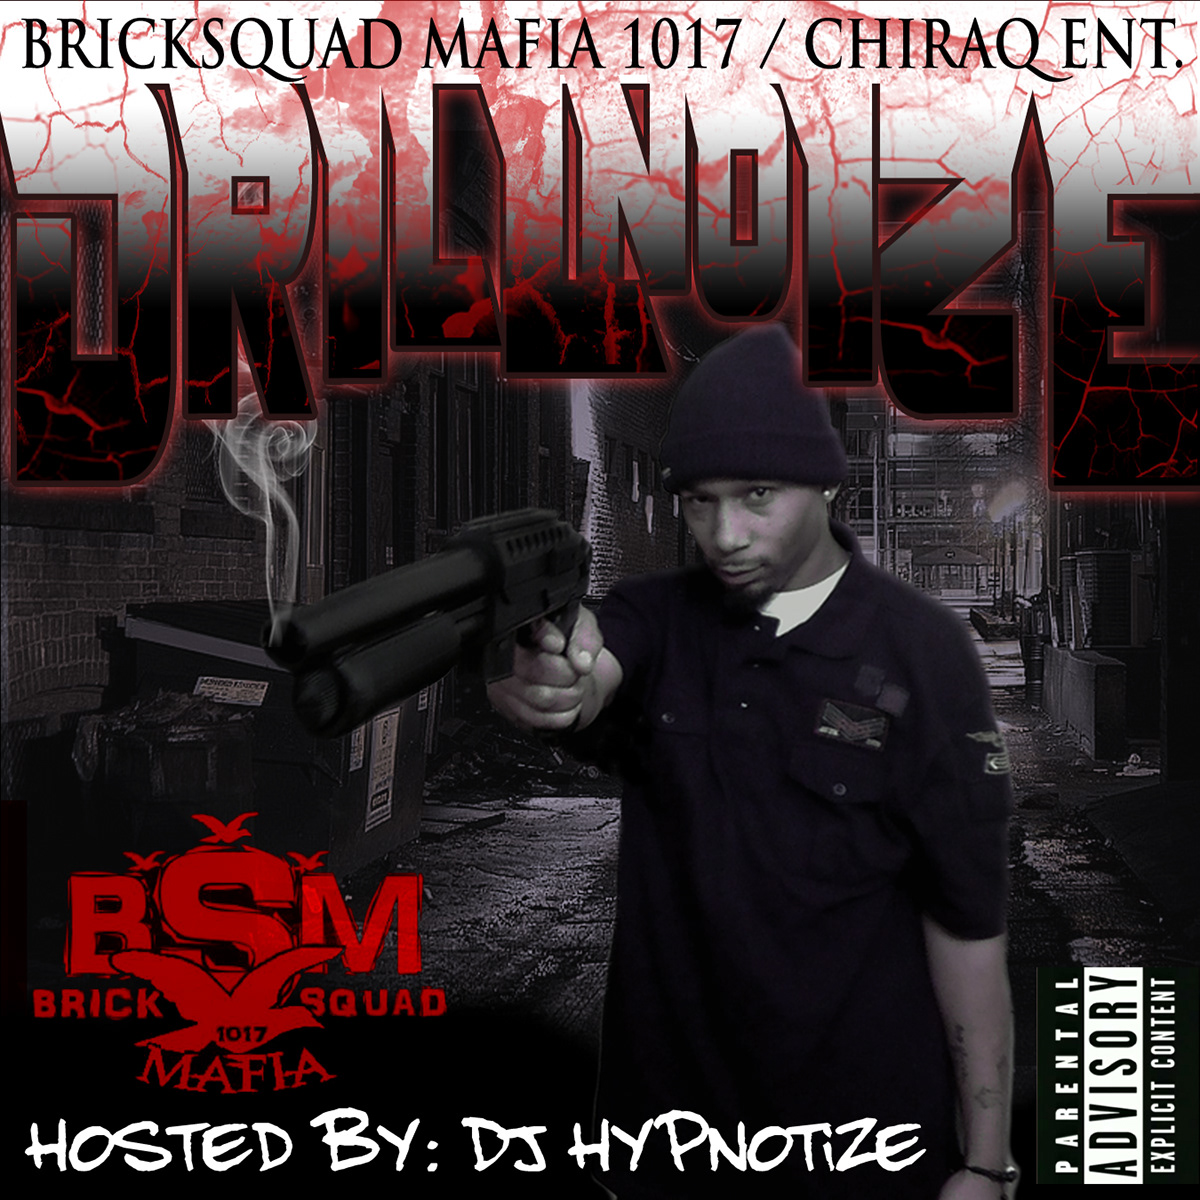 Album cover mixtape Bricksquad mafia chicago